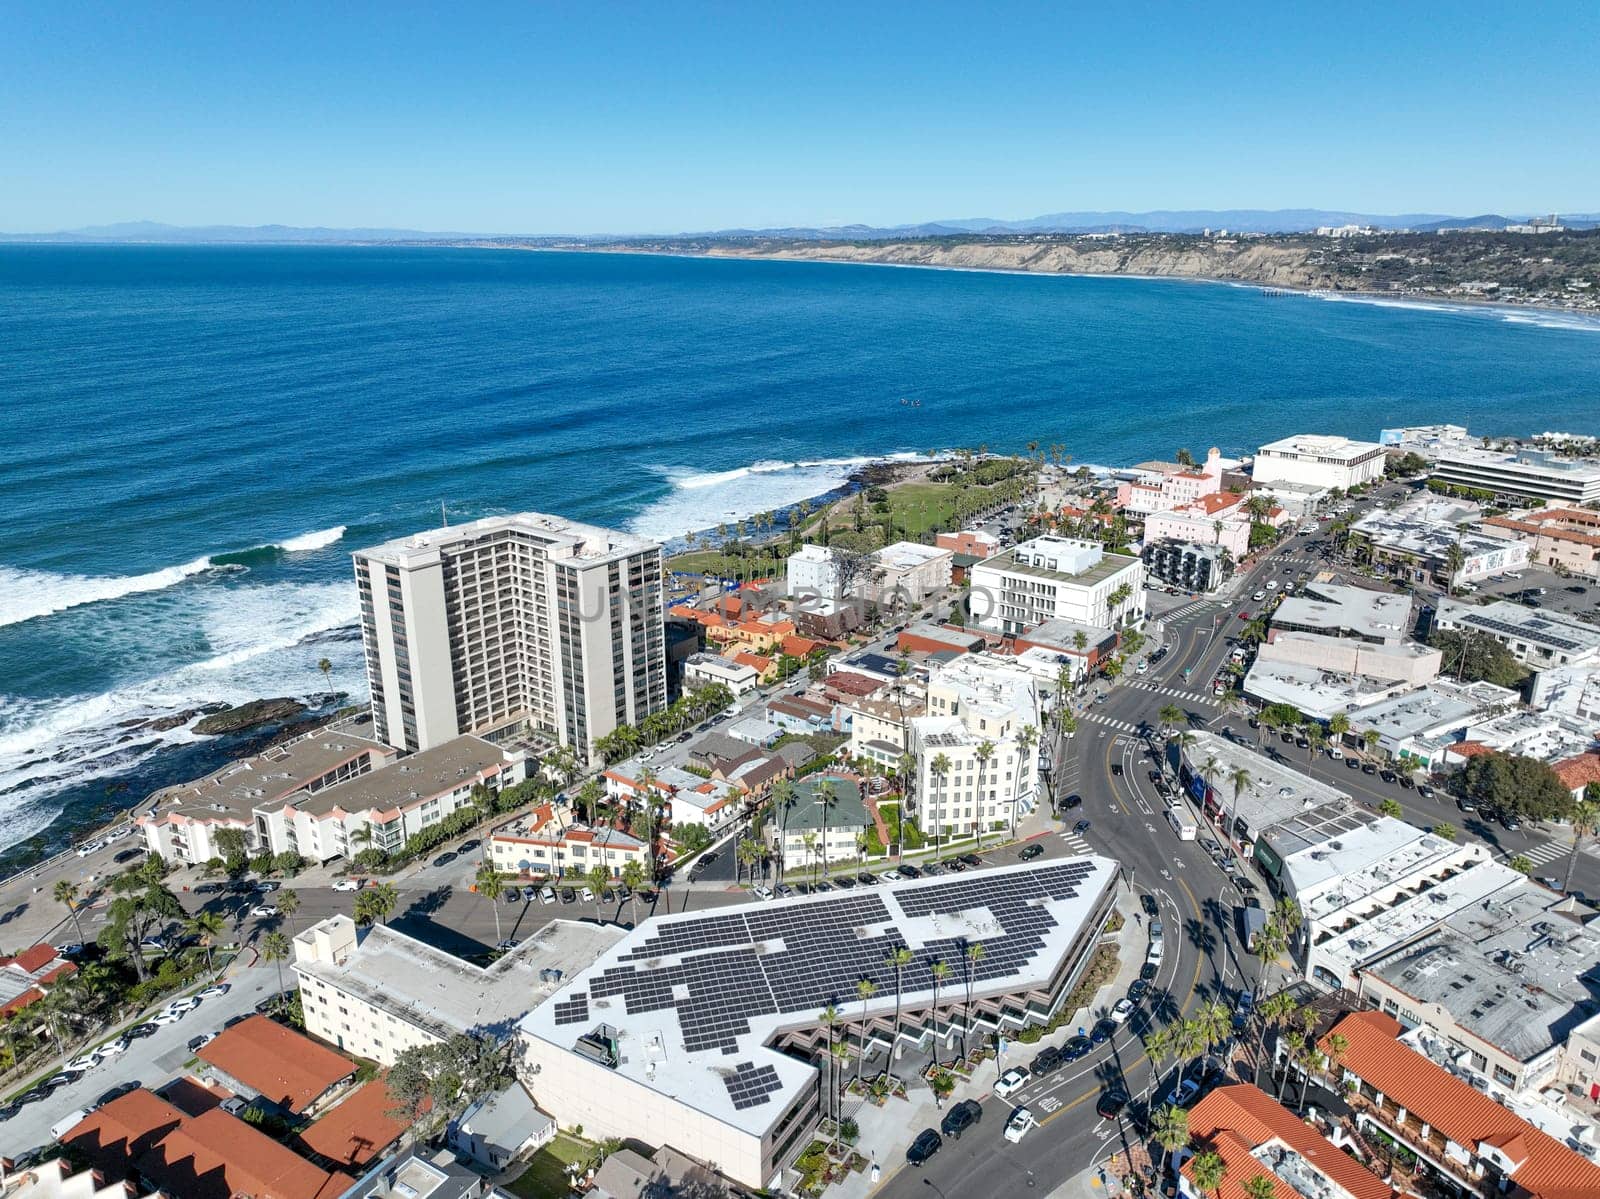 Aerial view of La Jolla cliffs and coastline, San Diego, California, USA